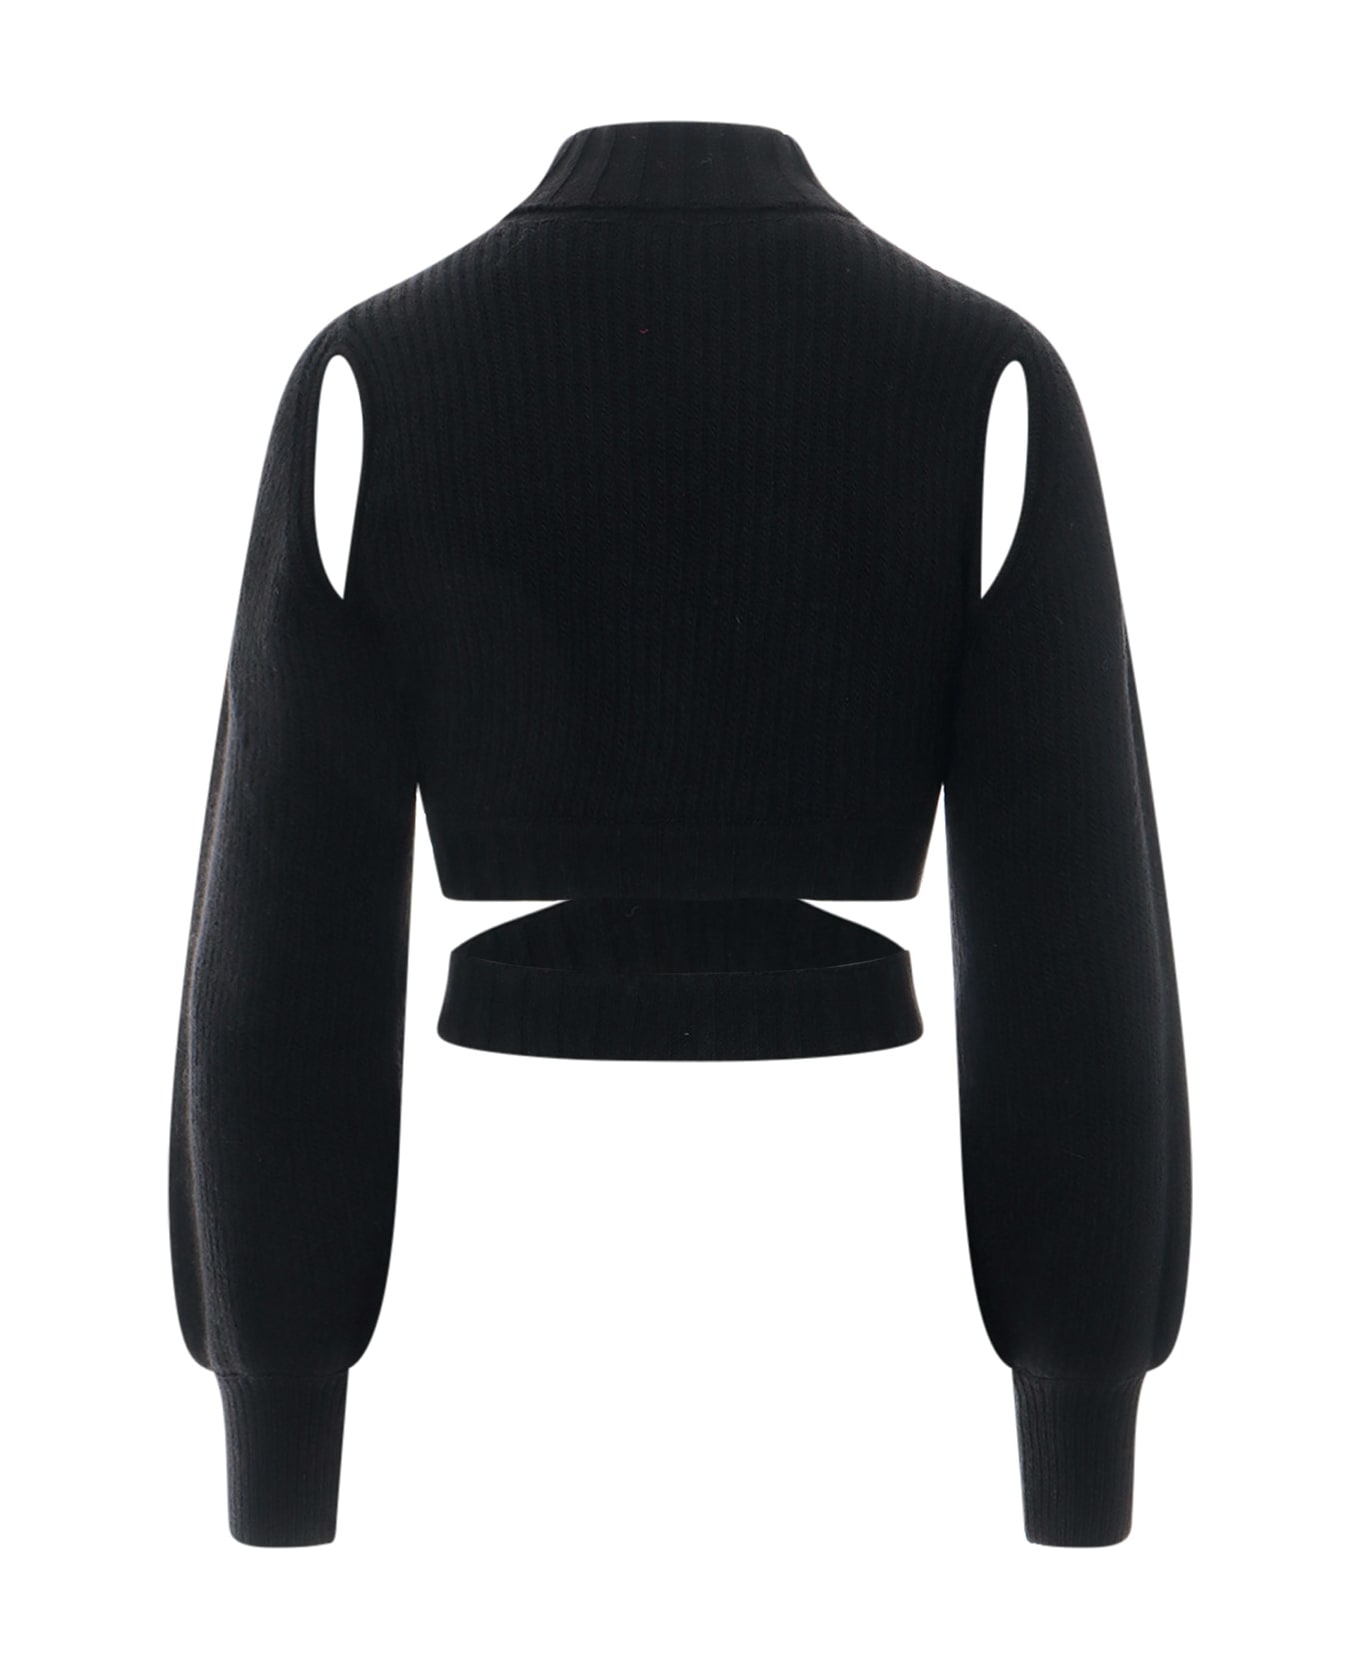 ANDREĀDAMO Sweater - Black